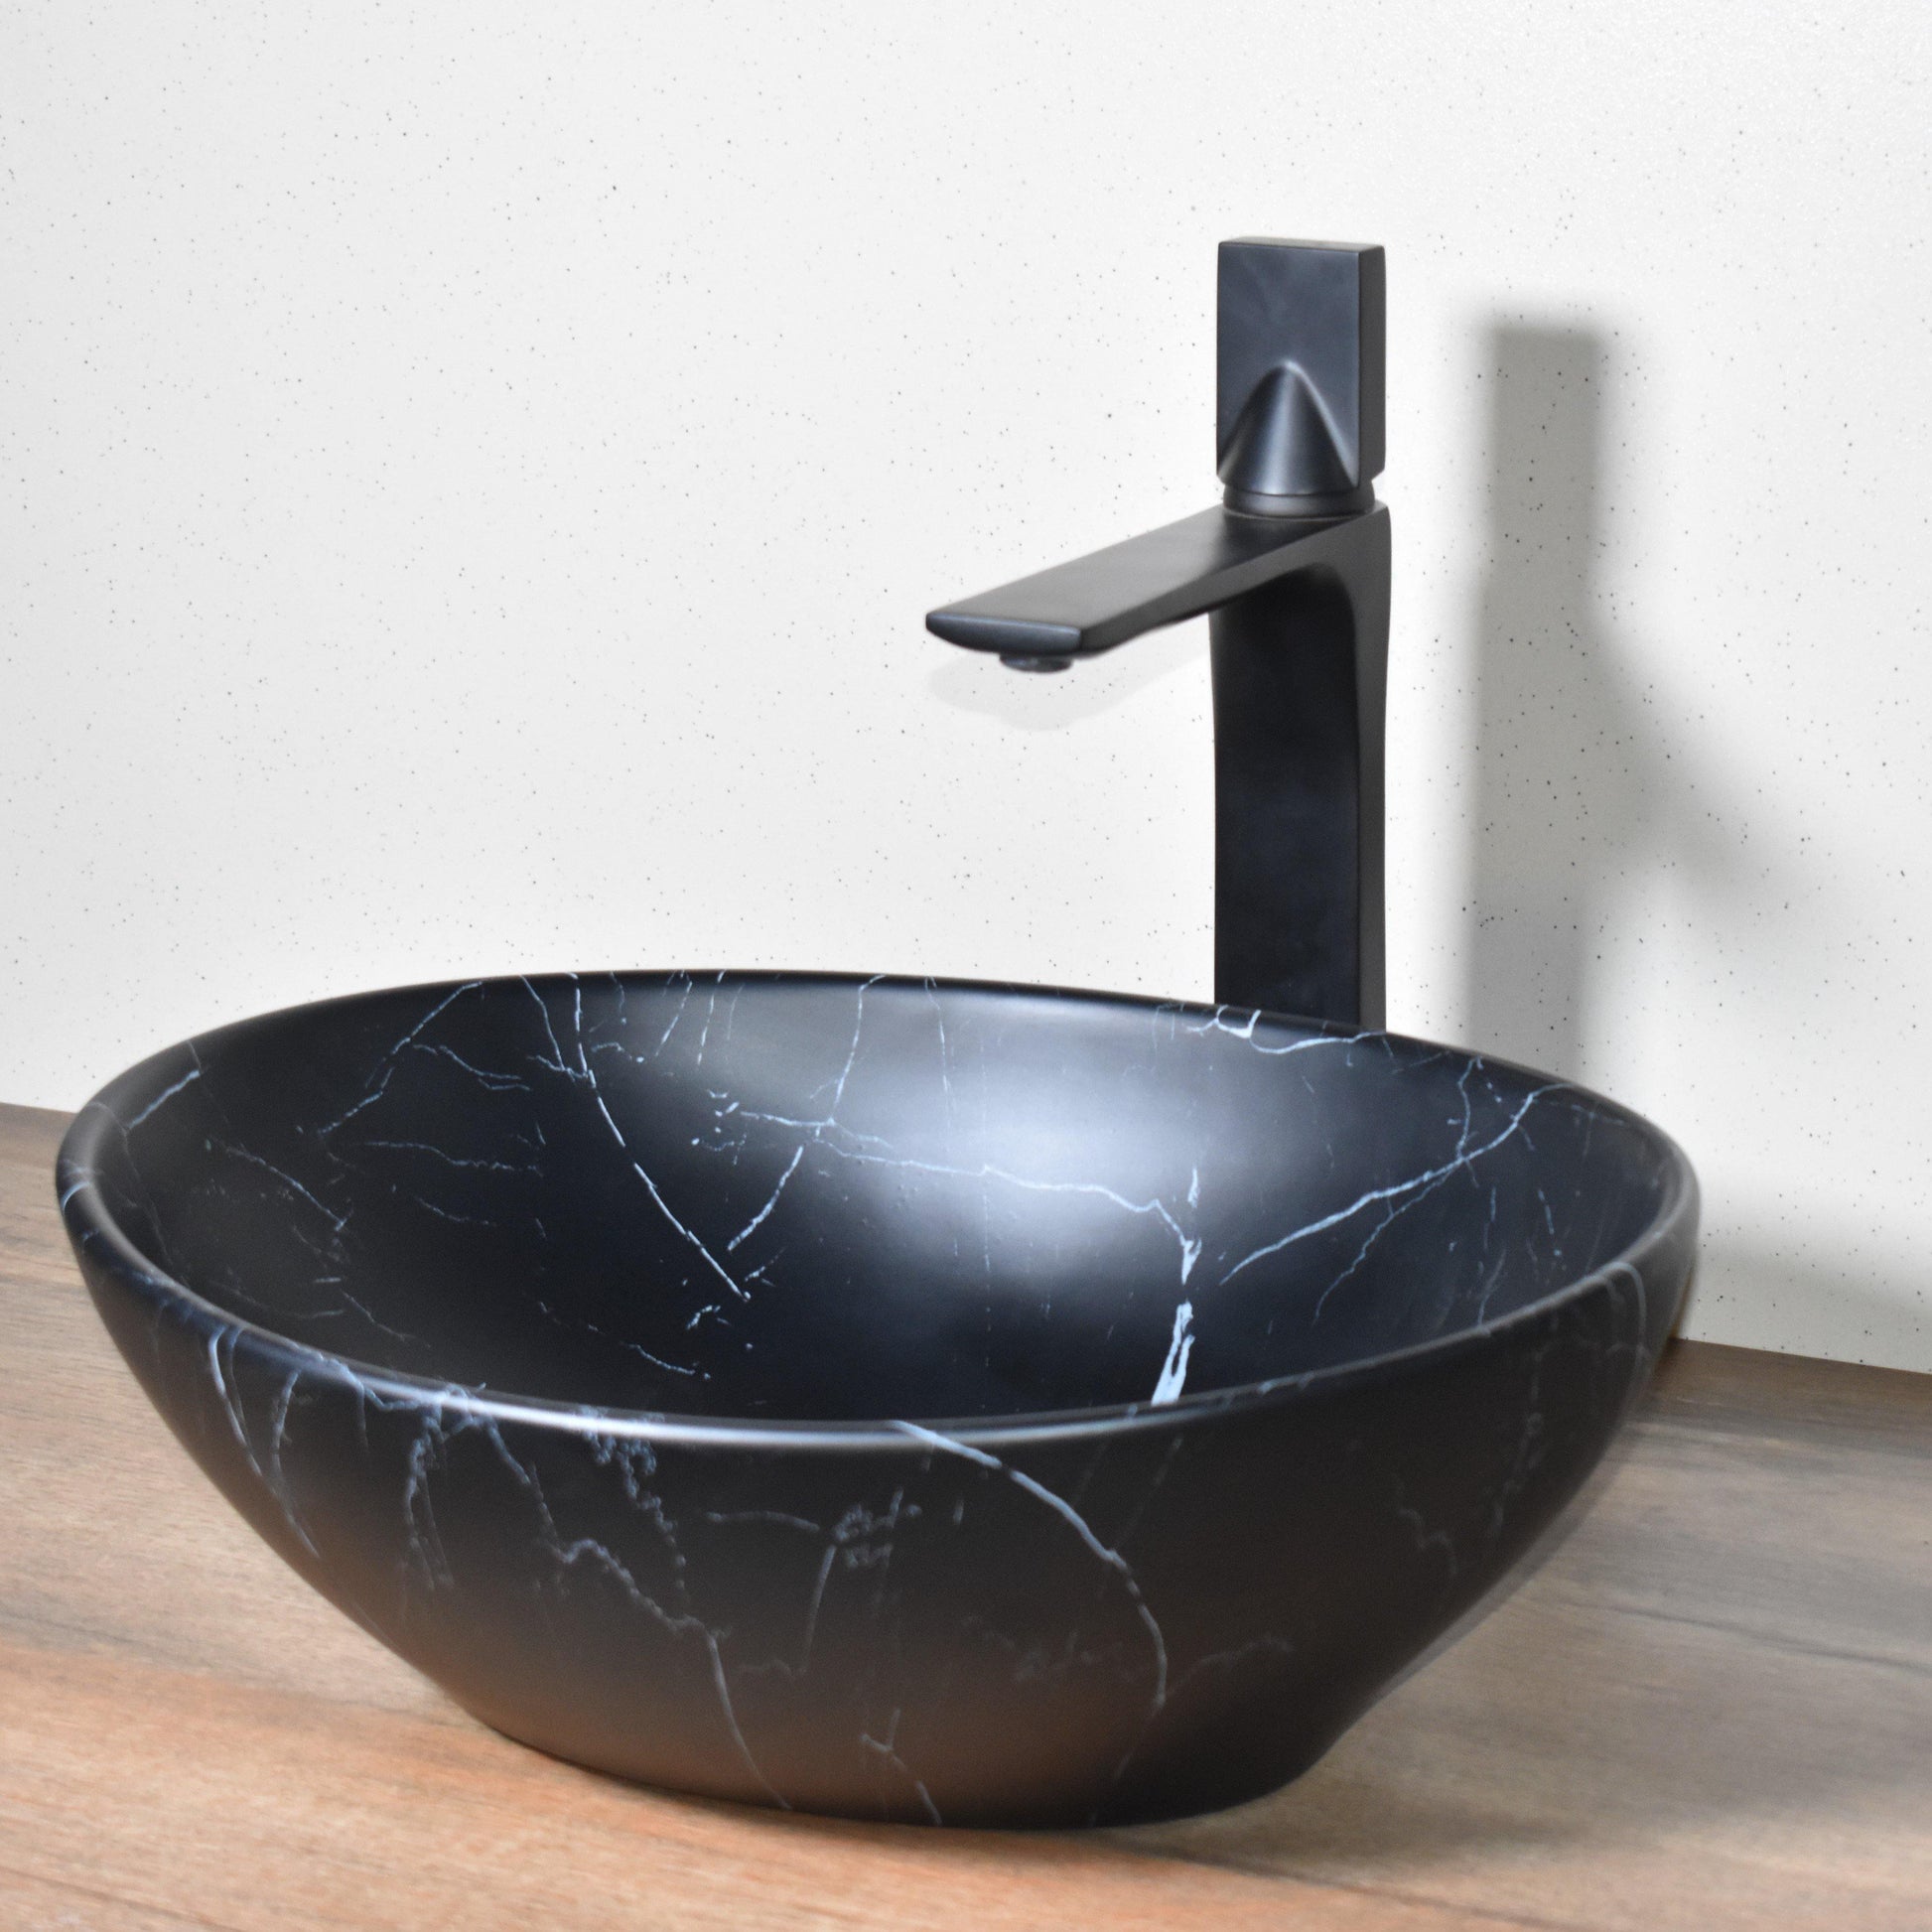 Ceramic Premium Designer Oval Shape Table Top Over Counter Vessel Sink Wash Basin for Bathroom 16 X 13 X 5.5 Inch Black Maat Basin For Bathroom - Bath Outlet